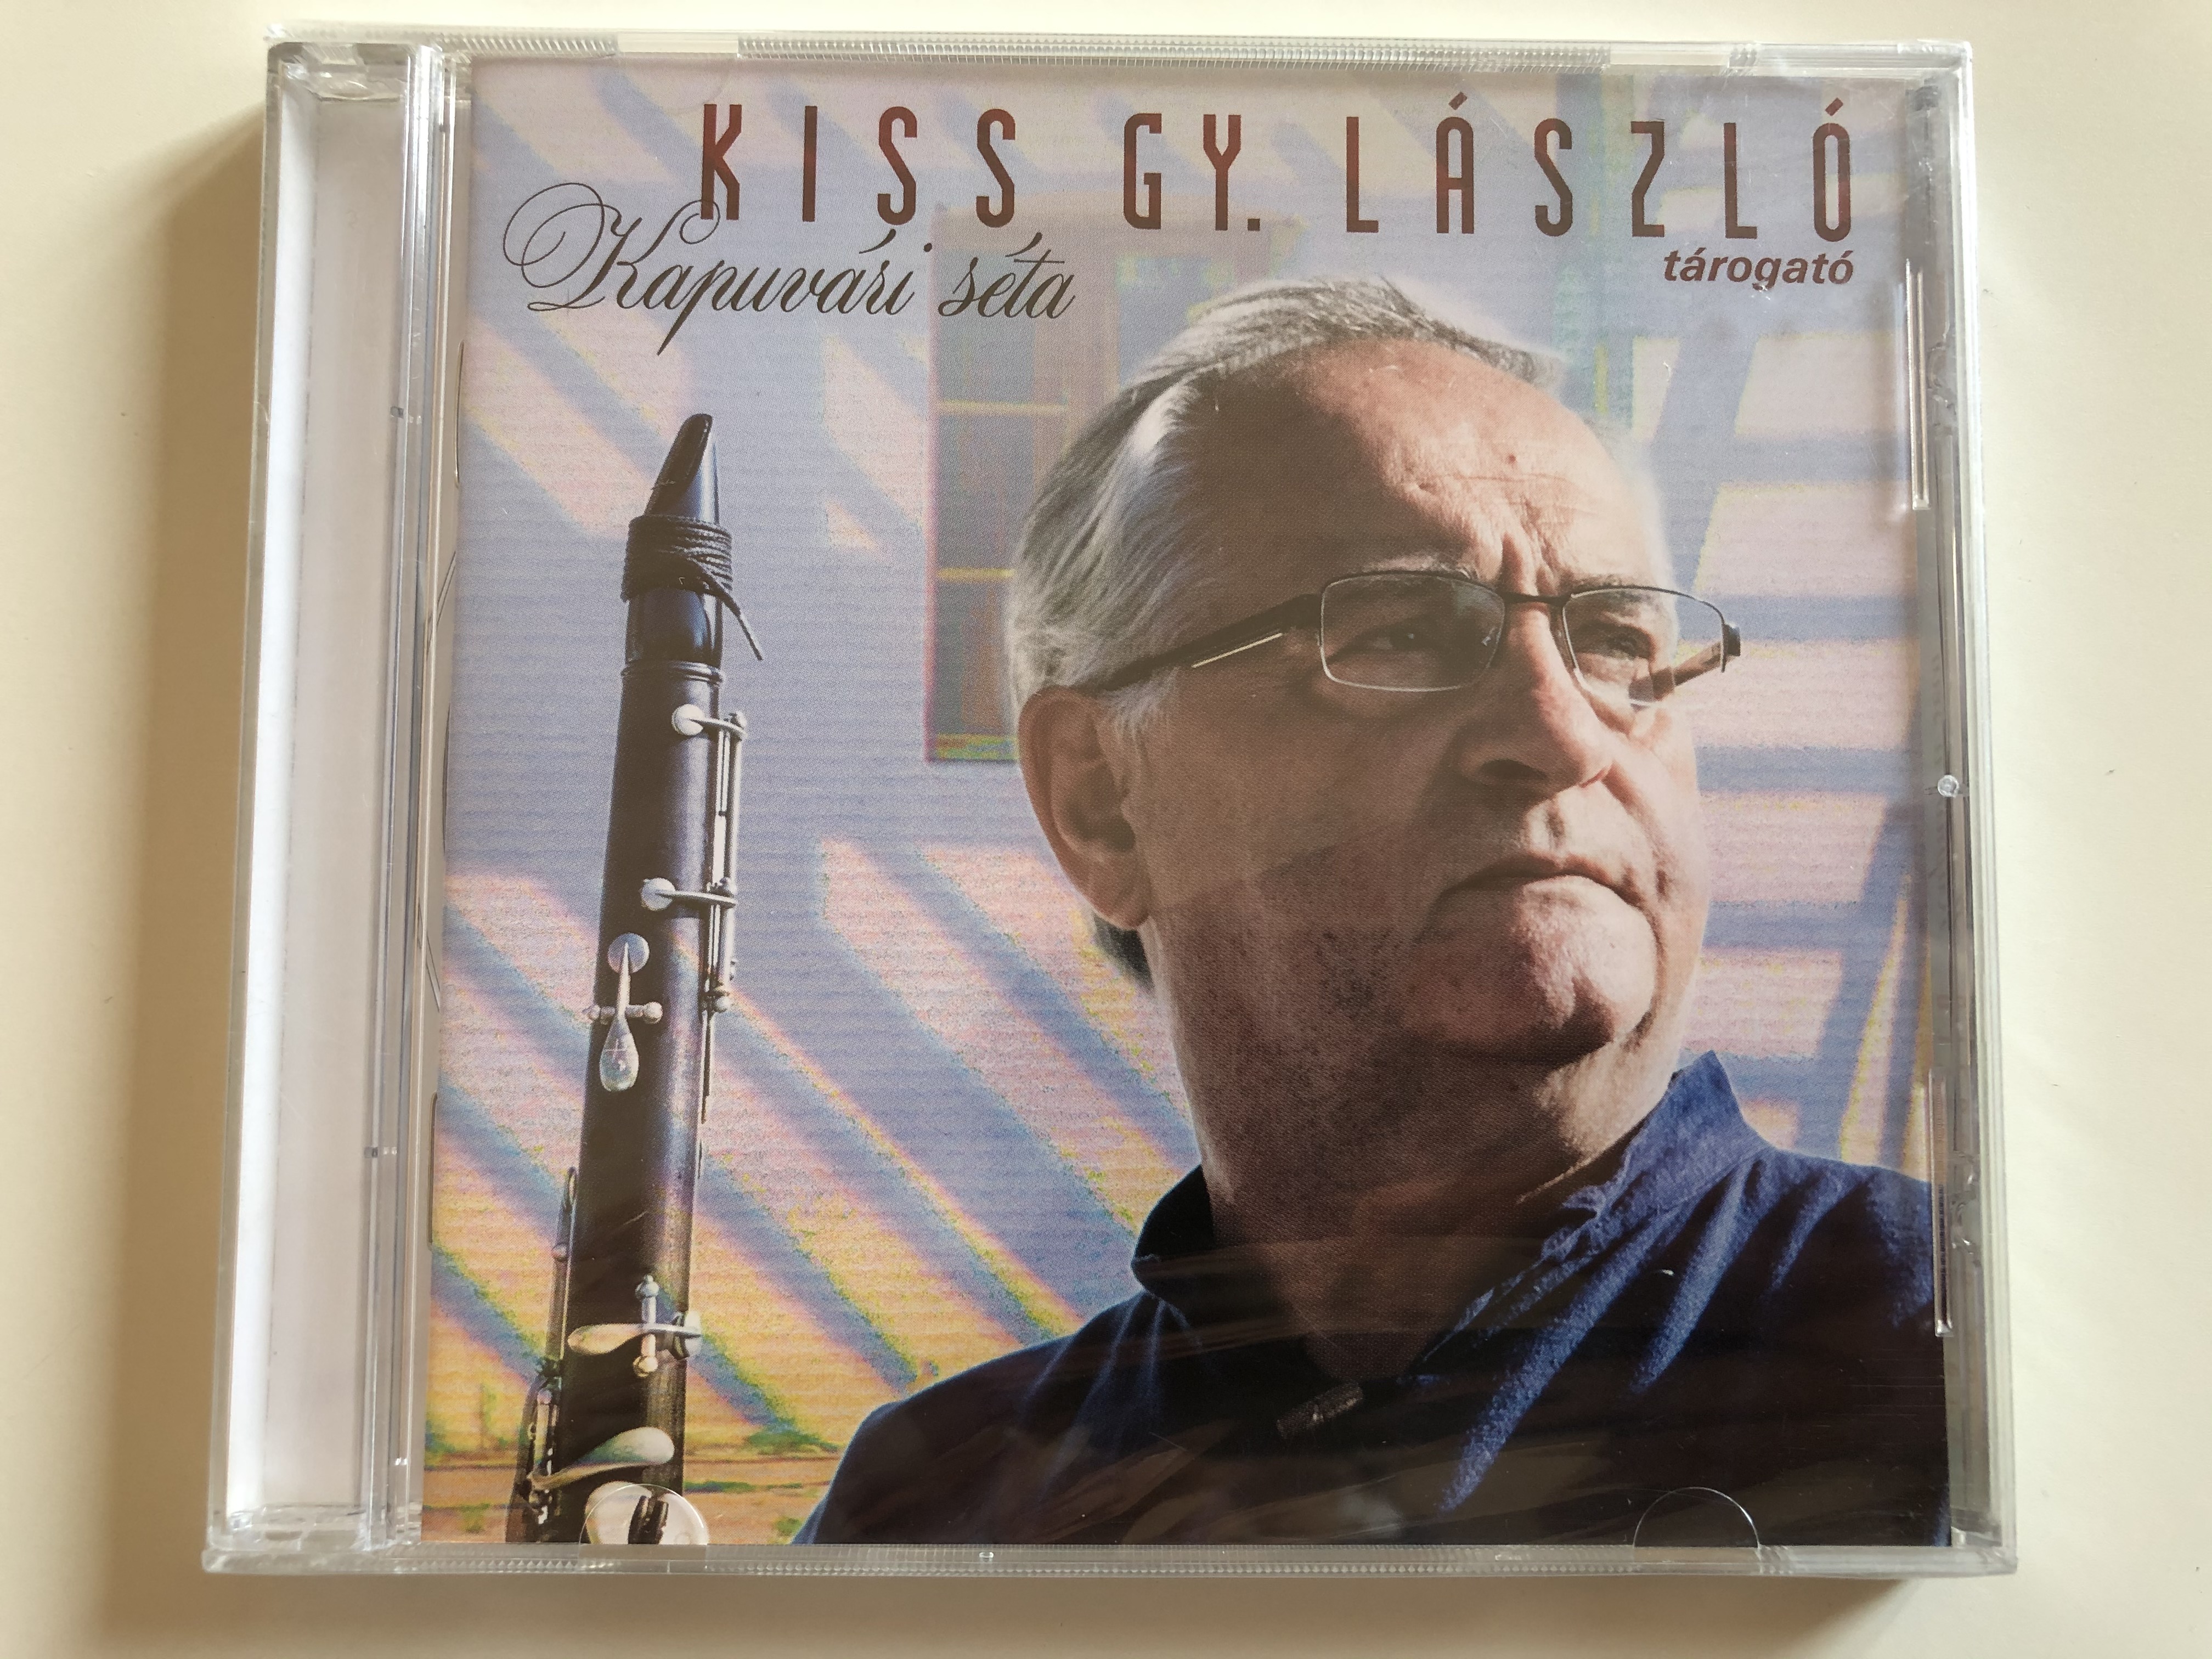 kiss-gy.-l-szl-tarogato-kapuv-ri-s-ta-folk-eur-pa-audio-cd-2014-fecd-059-1-.jpg